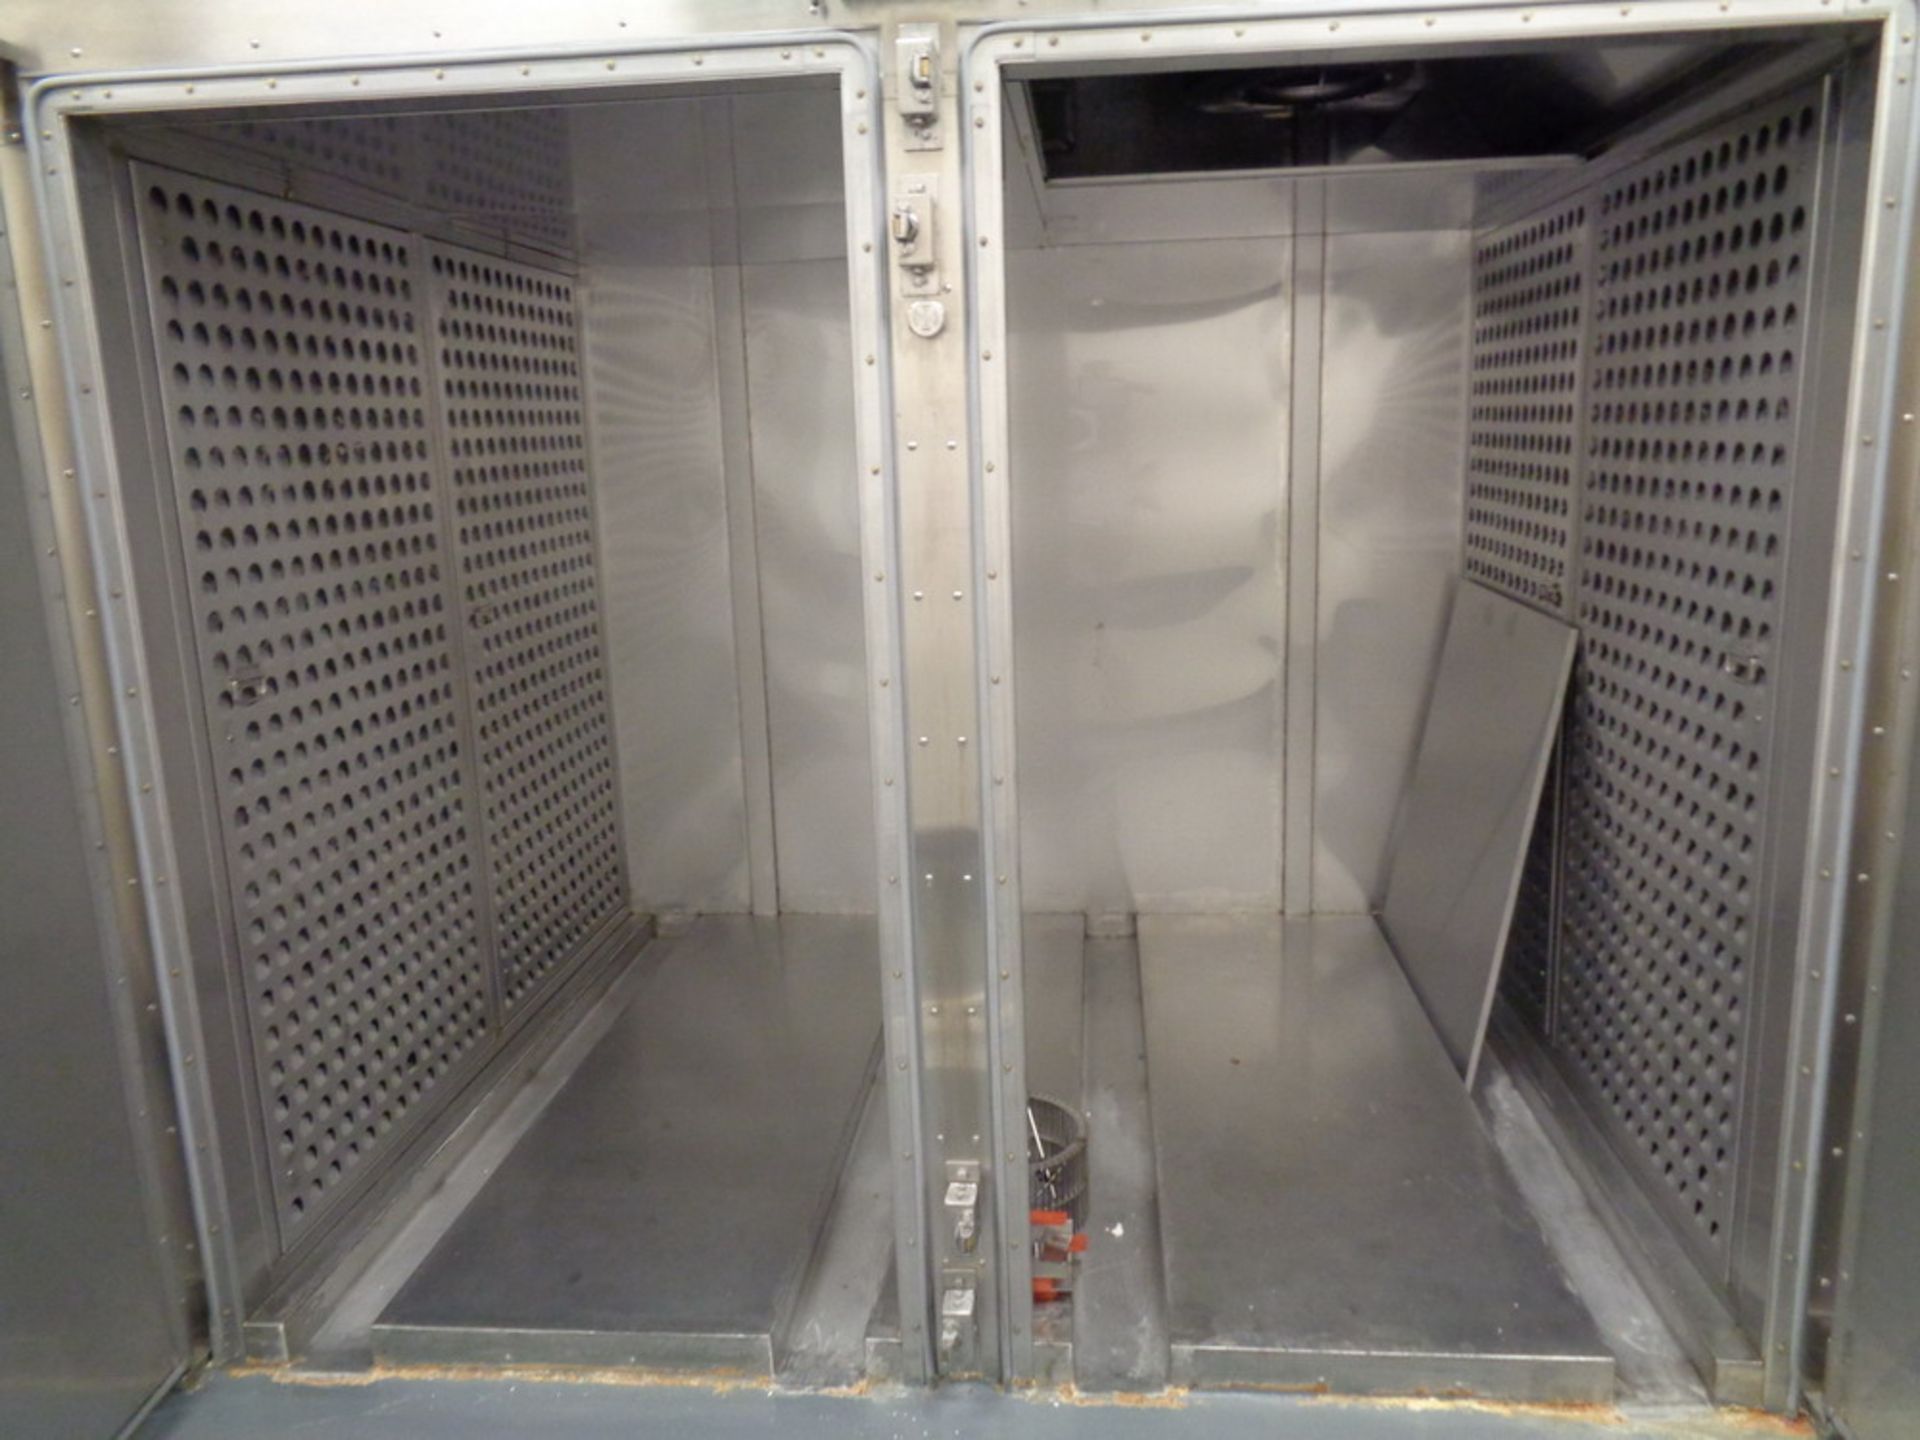 Gruenberg Stainless Steel 2 Door/4 Truck Pharmaceutical Truck/Tray Drying Oven - Image 4 of 6